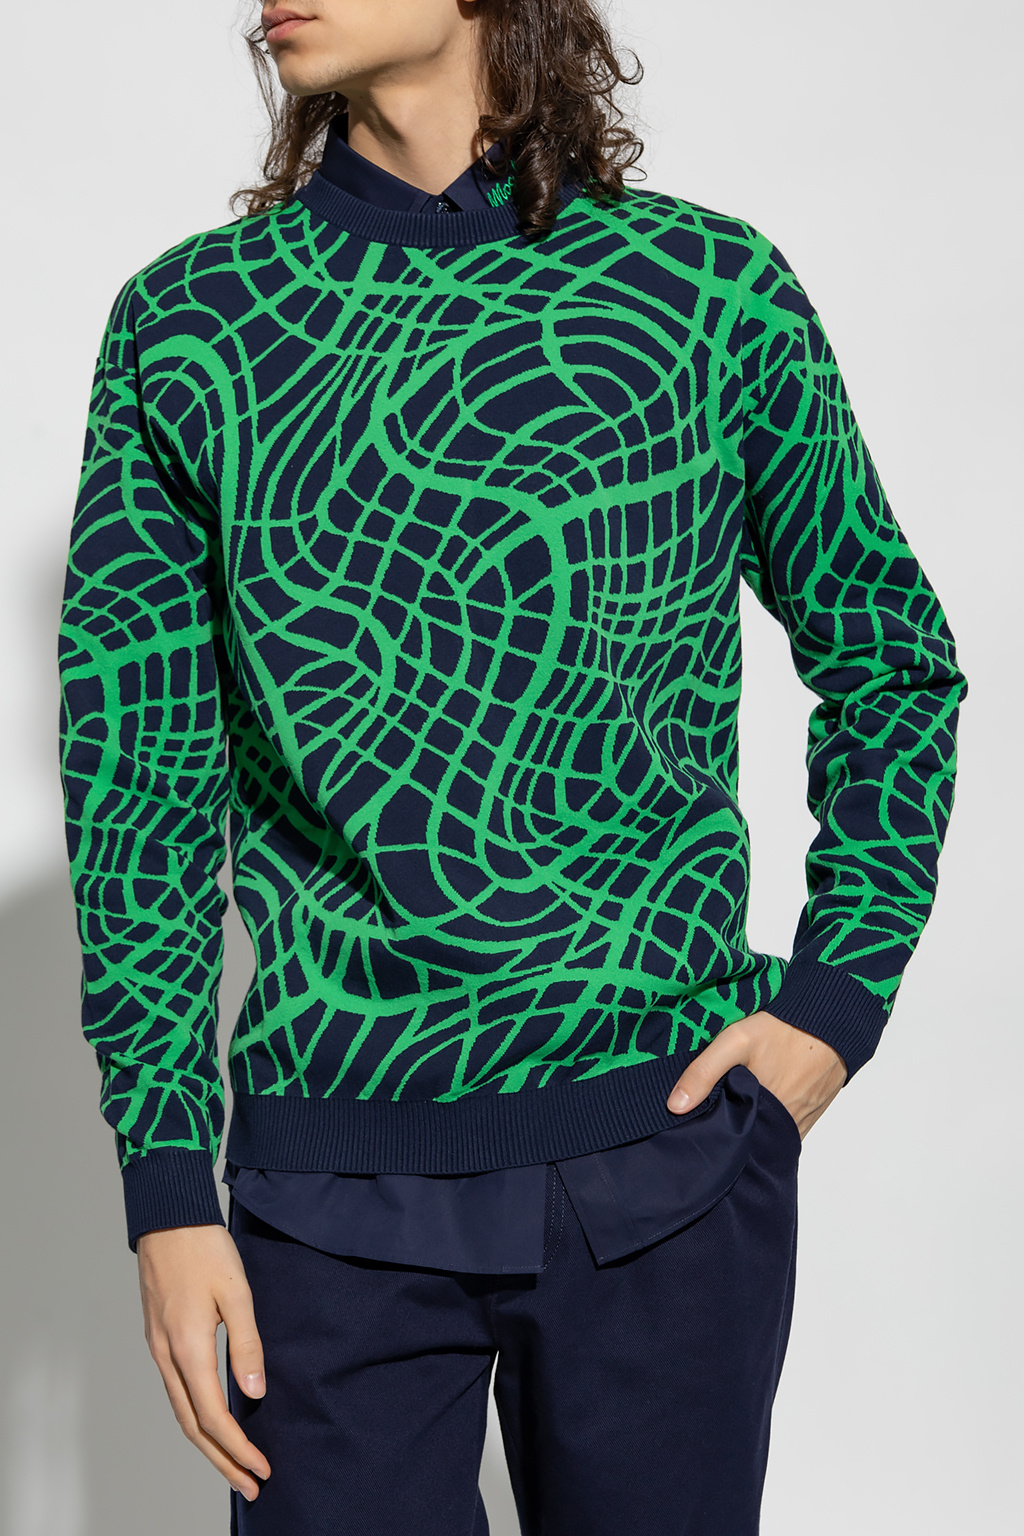 Moschino Patterned sweater